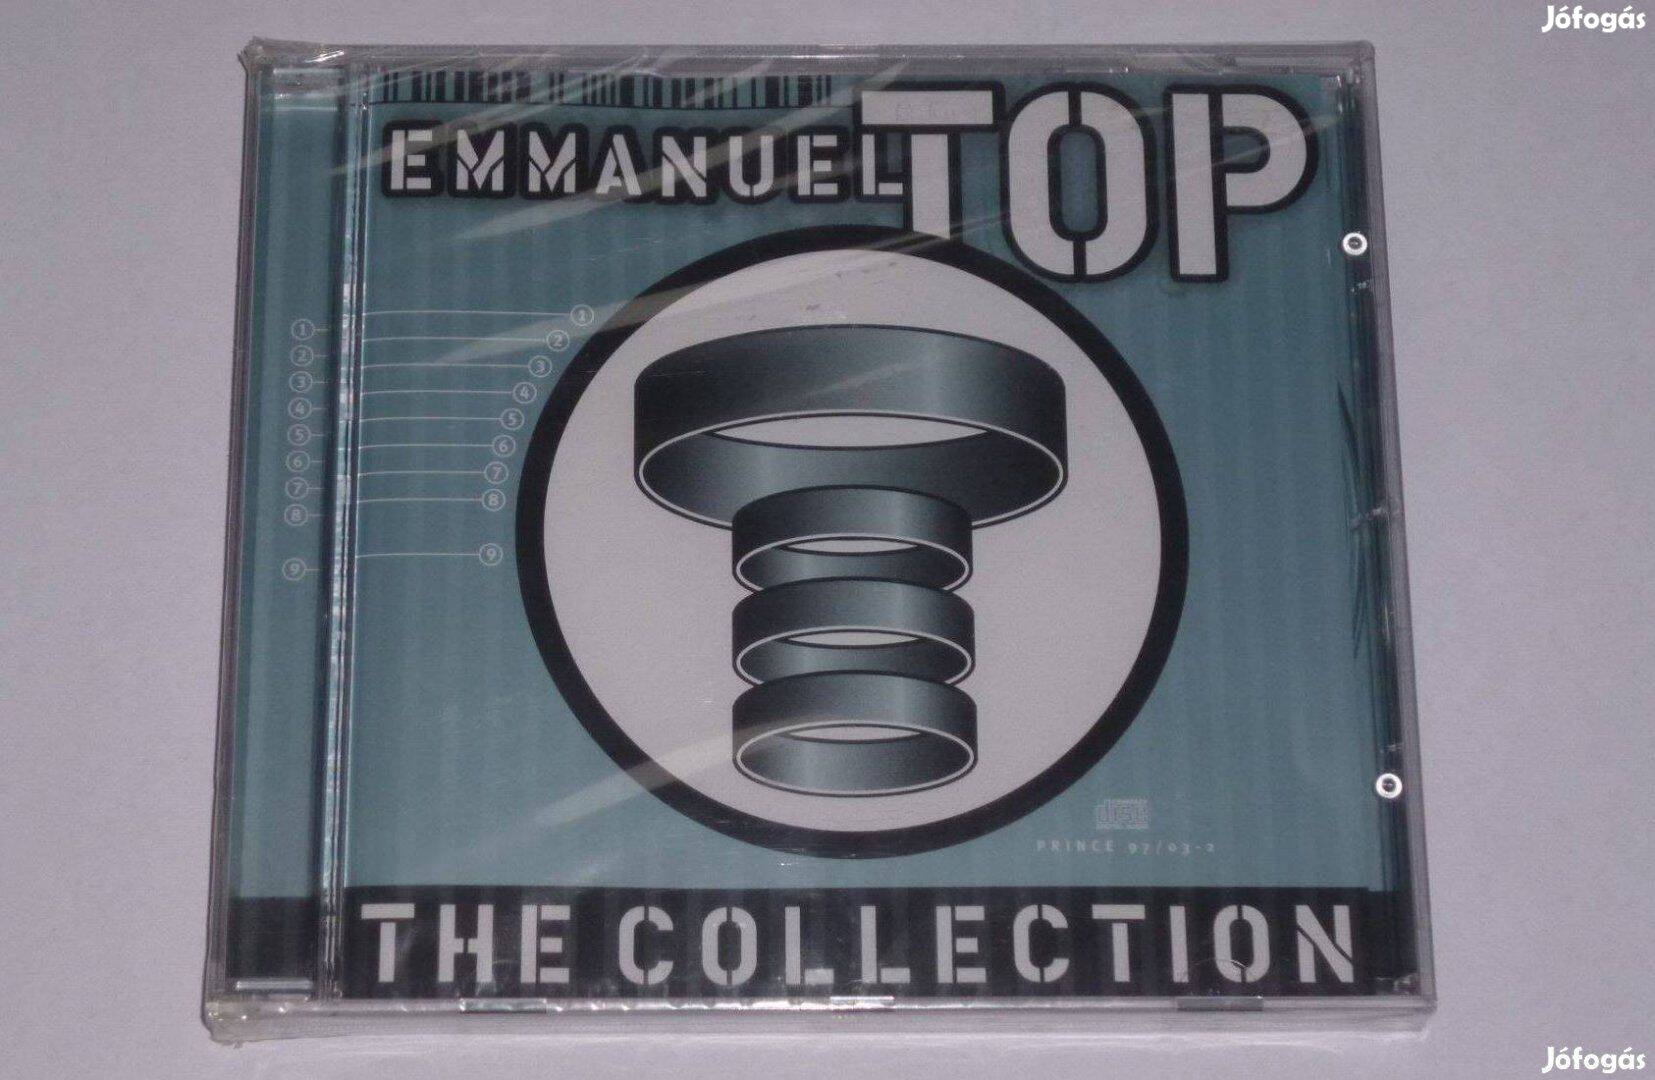 Emmanuel Top - The Collection CD 1997. Germany Bontatlan